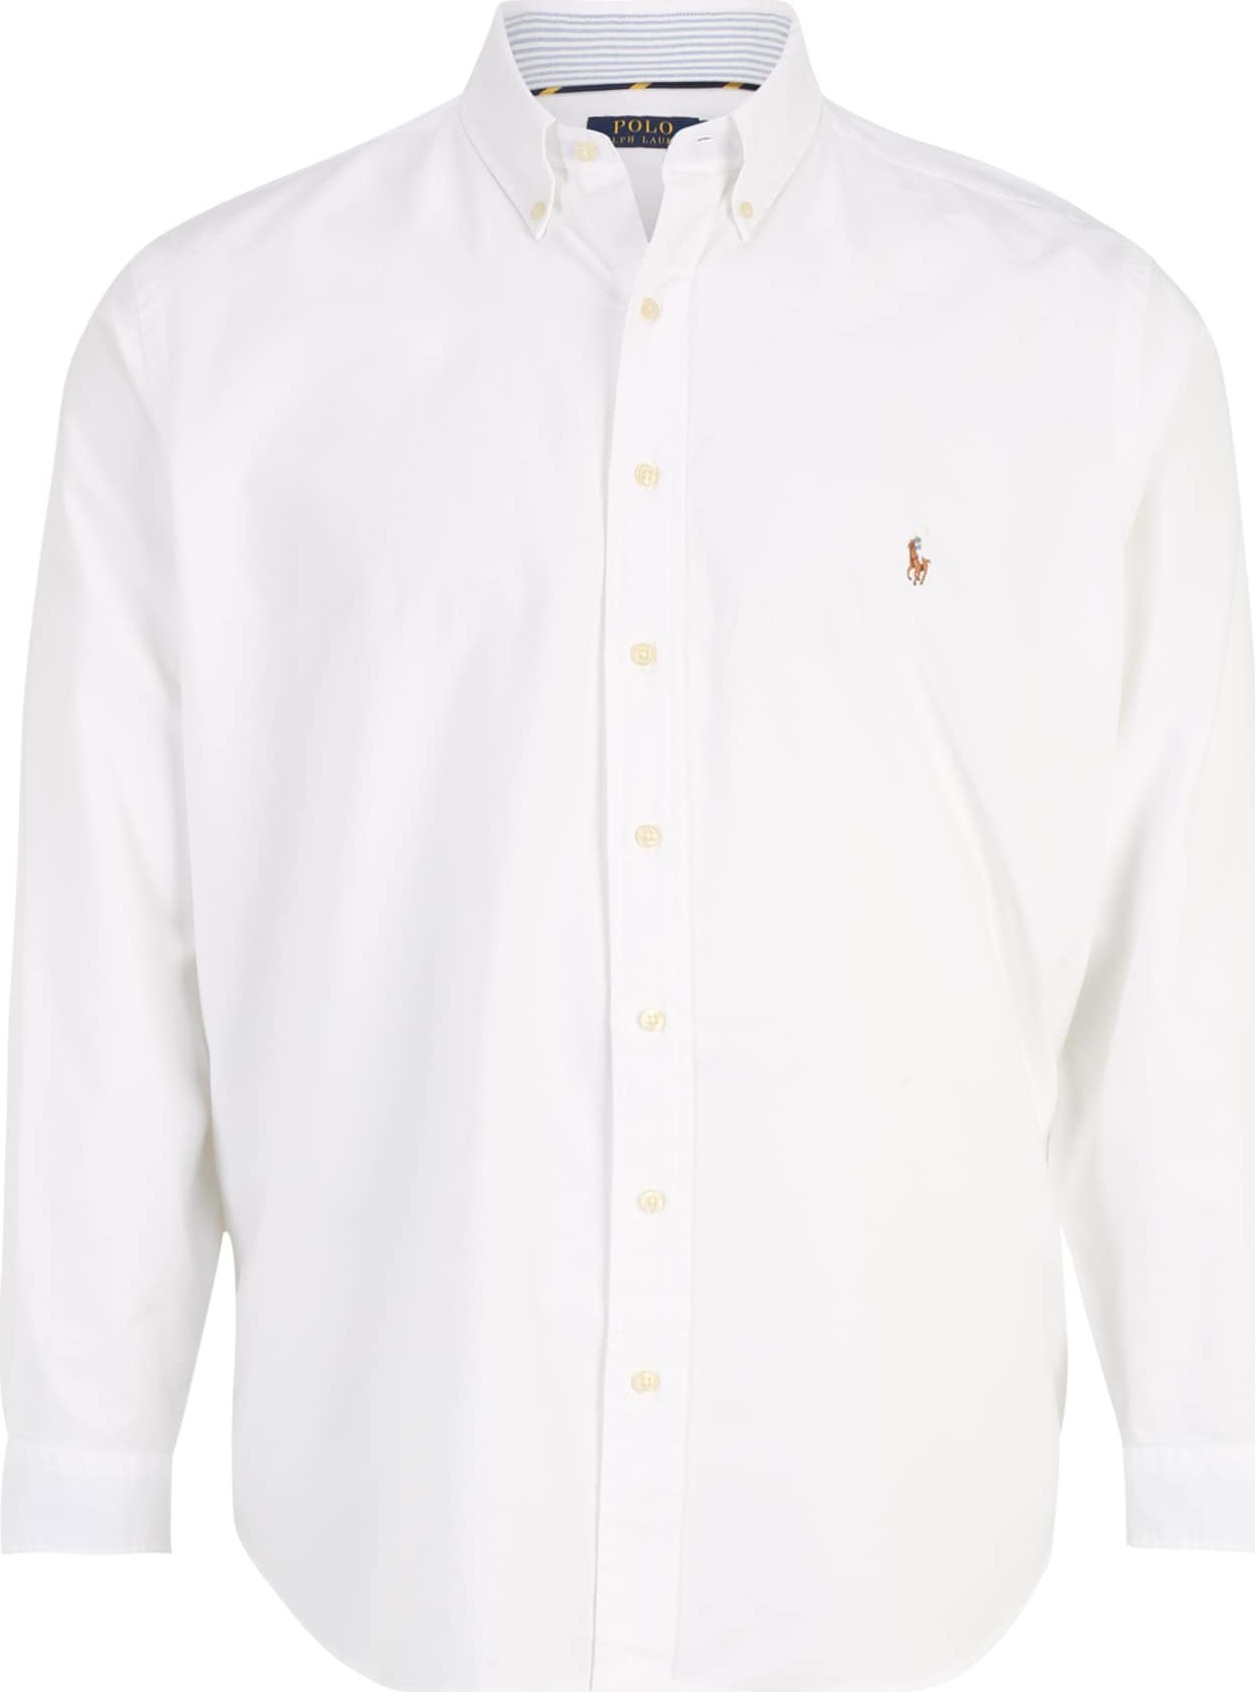 Polo Ralph Lauren Big & Tall Košile bílá